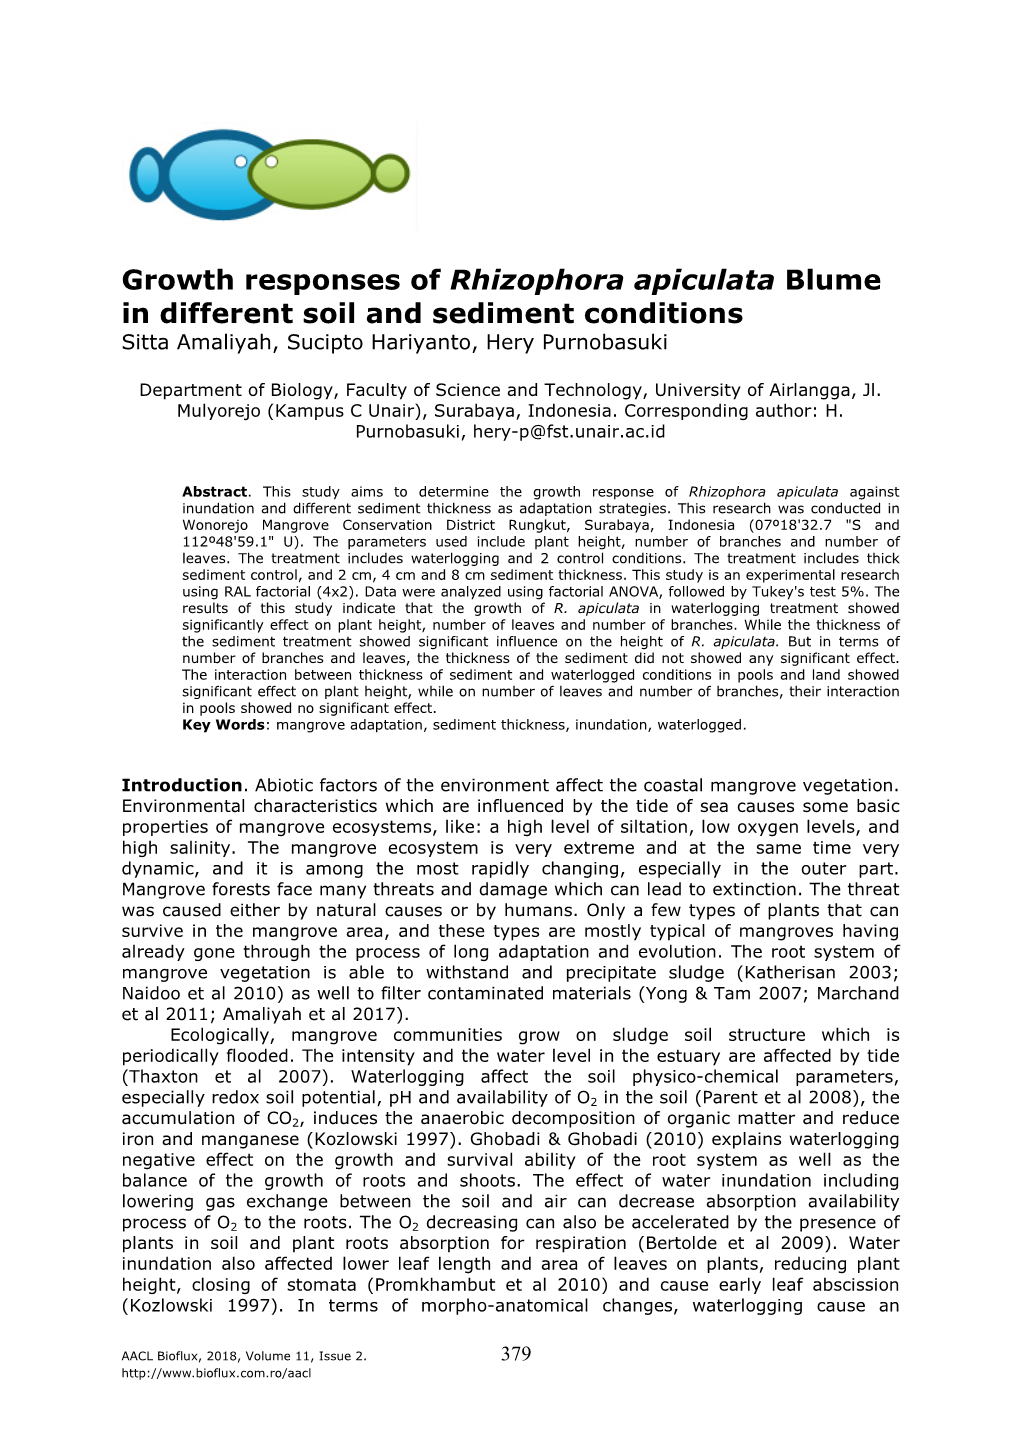 Amaliyah S., Hariyanato S., Purnobasuki H., 2018 Growth Responses of Rhizophora Apiculata Blume in Different Soil and Sediment Conditions